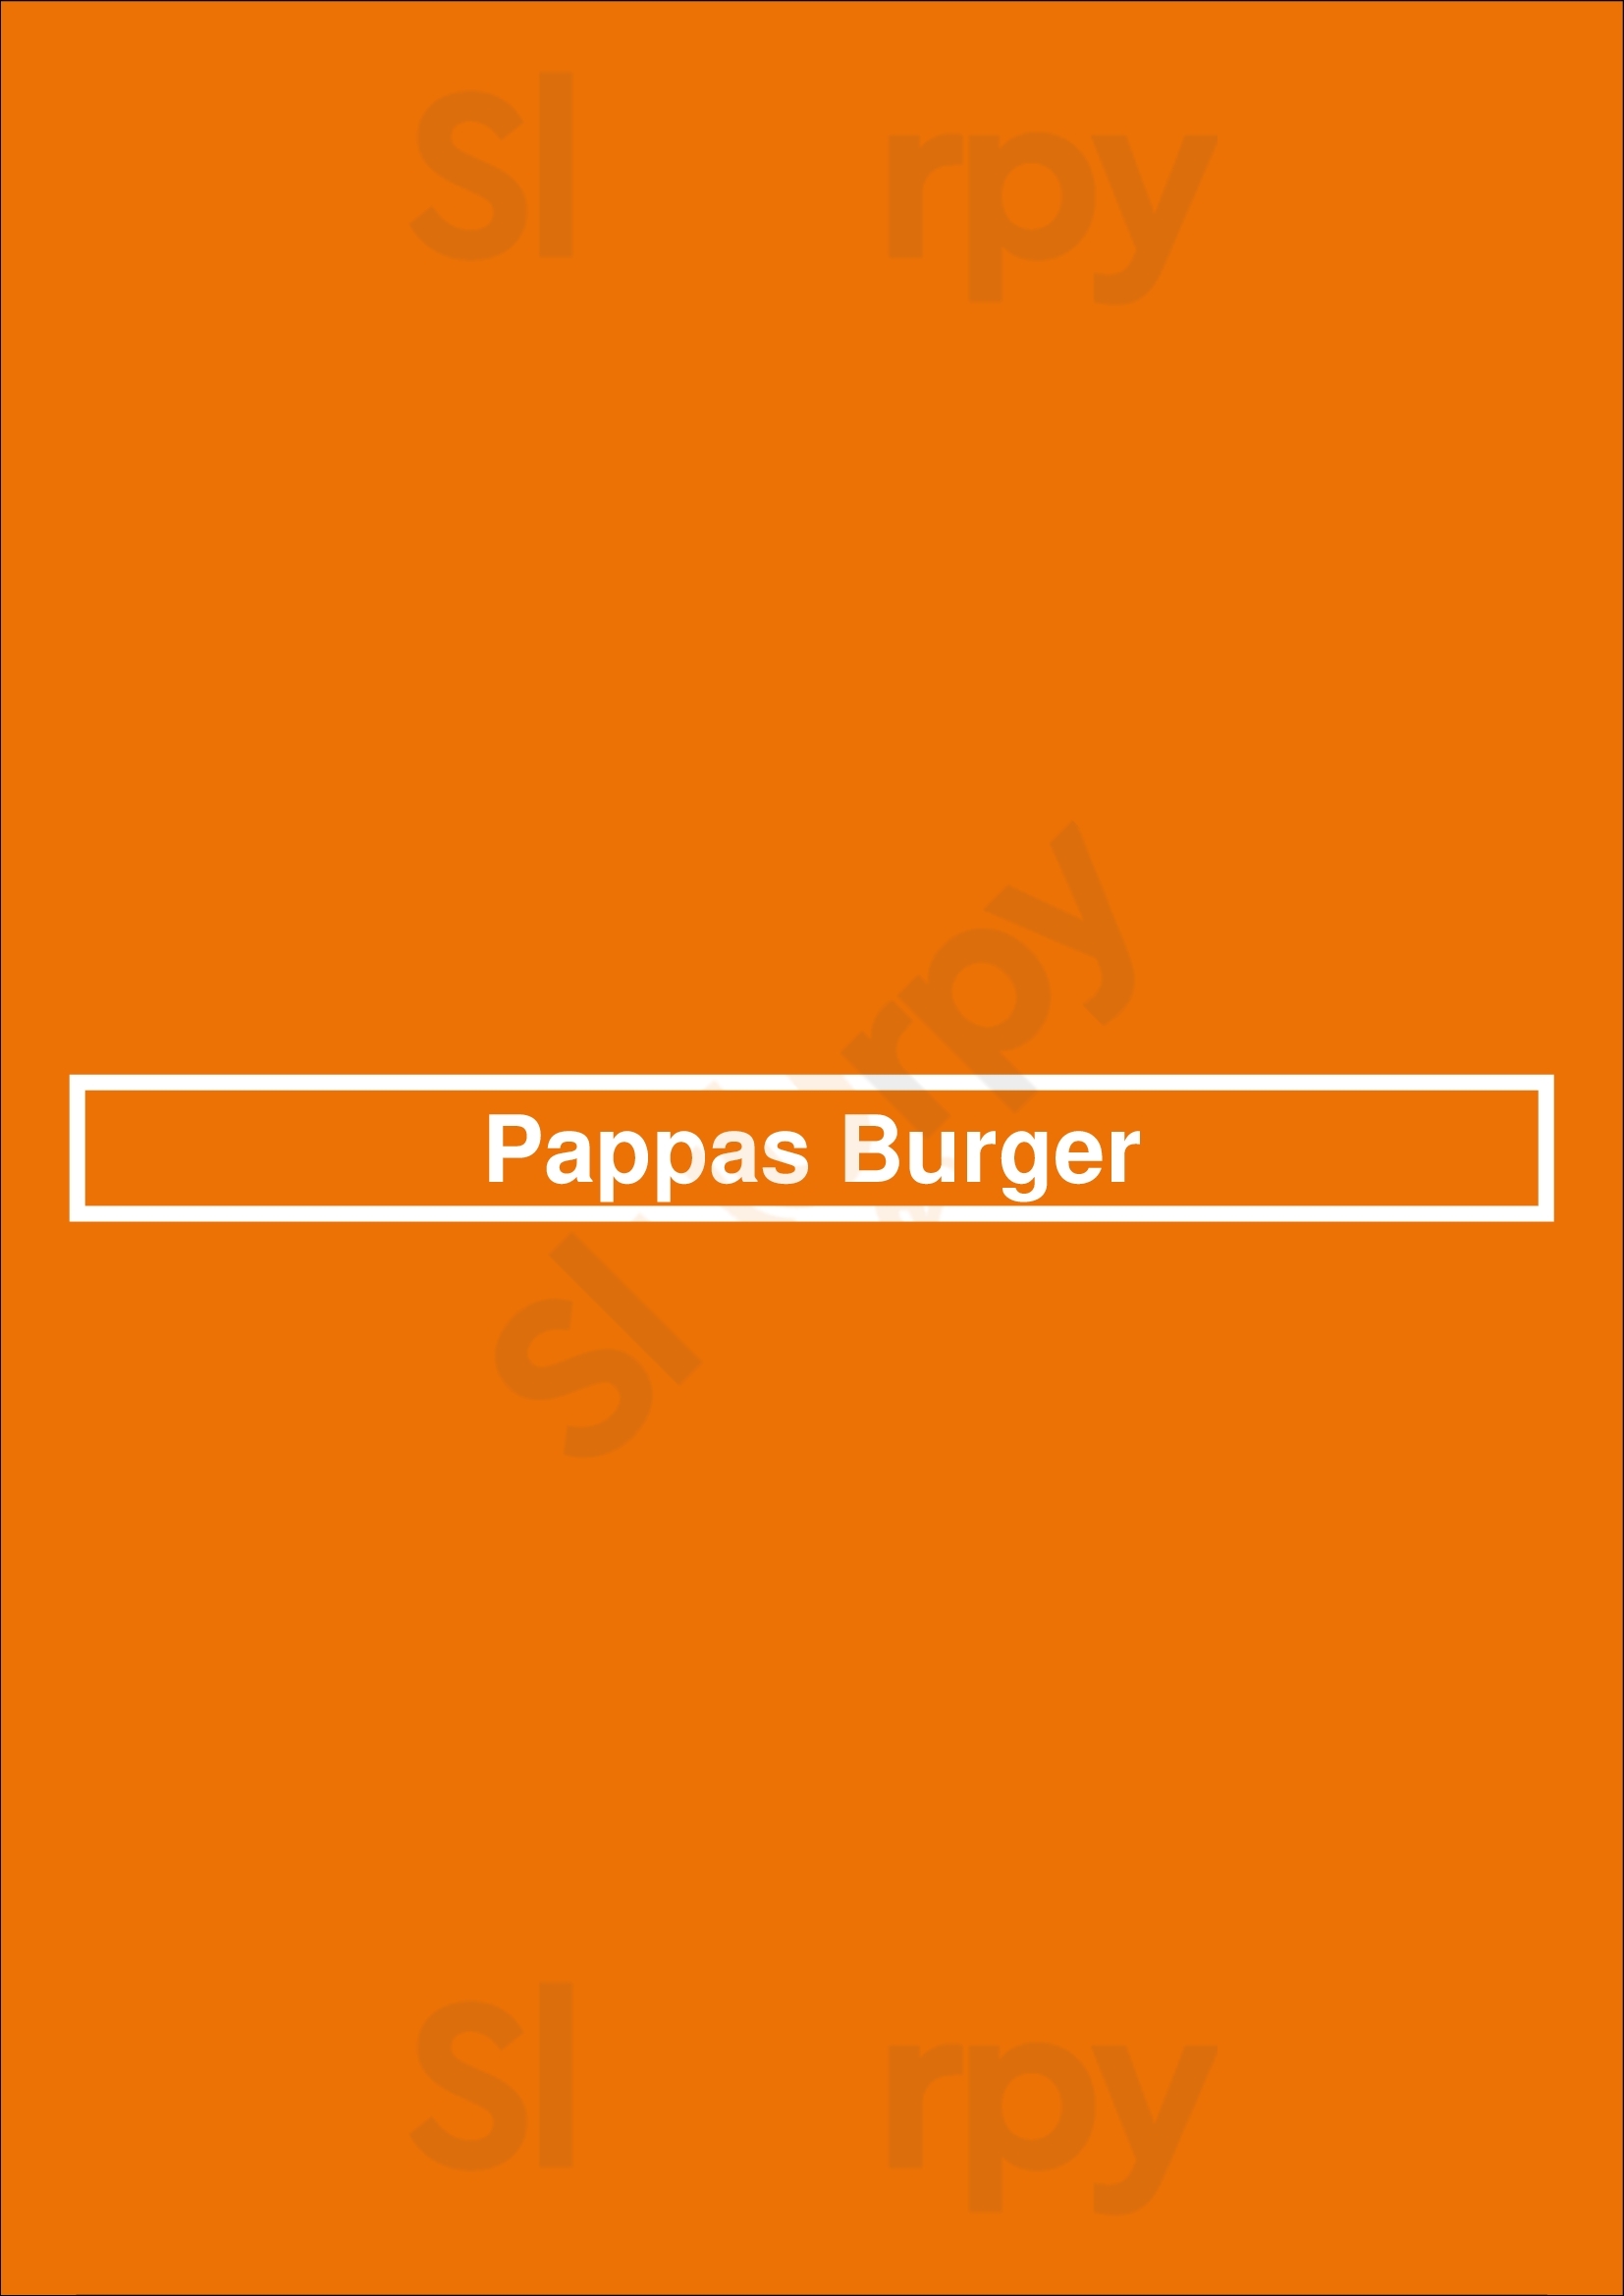 Pappas Burger Houston Menu - 1